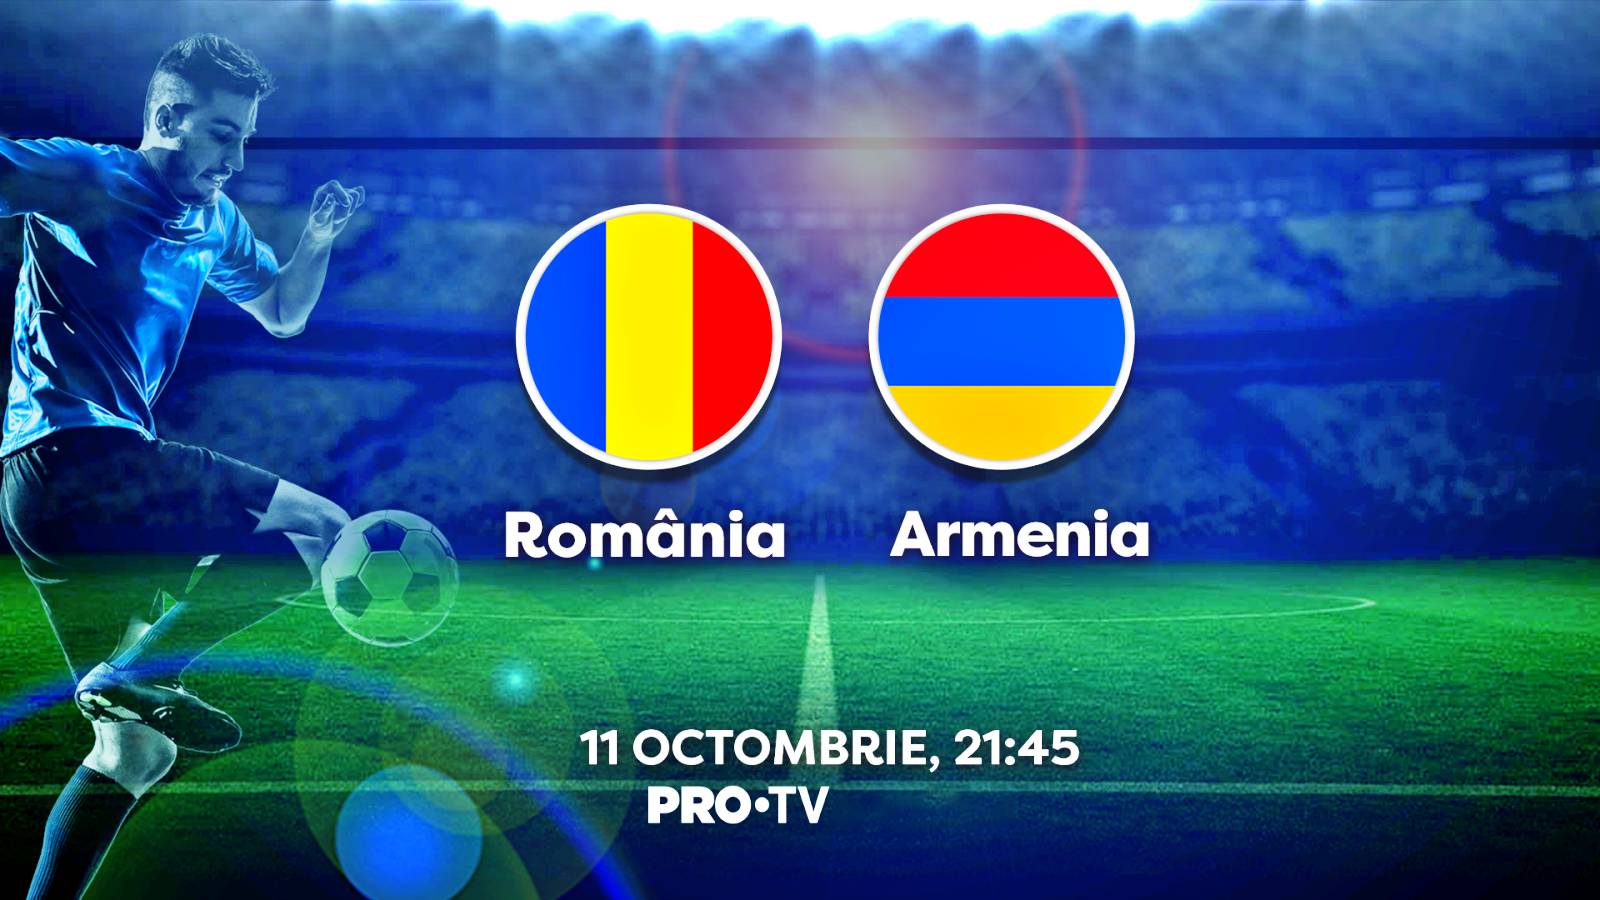 ROMANIA-ARMENIA LIVE PRO TV